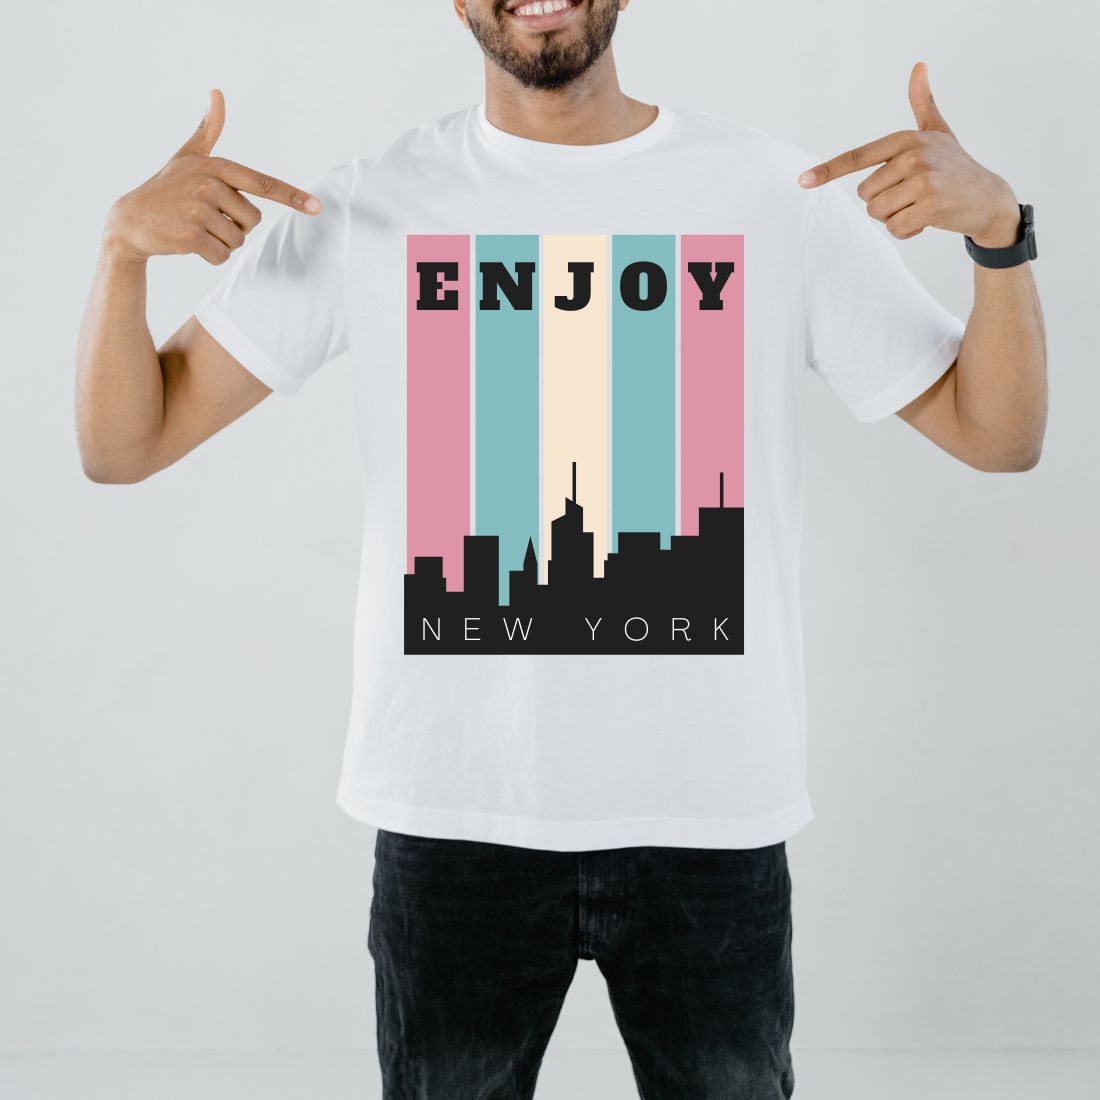 Elegant design "Enjoy New York" preview image.